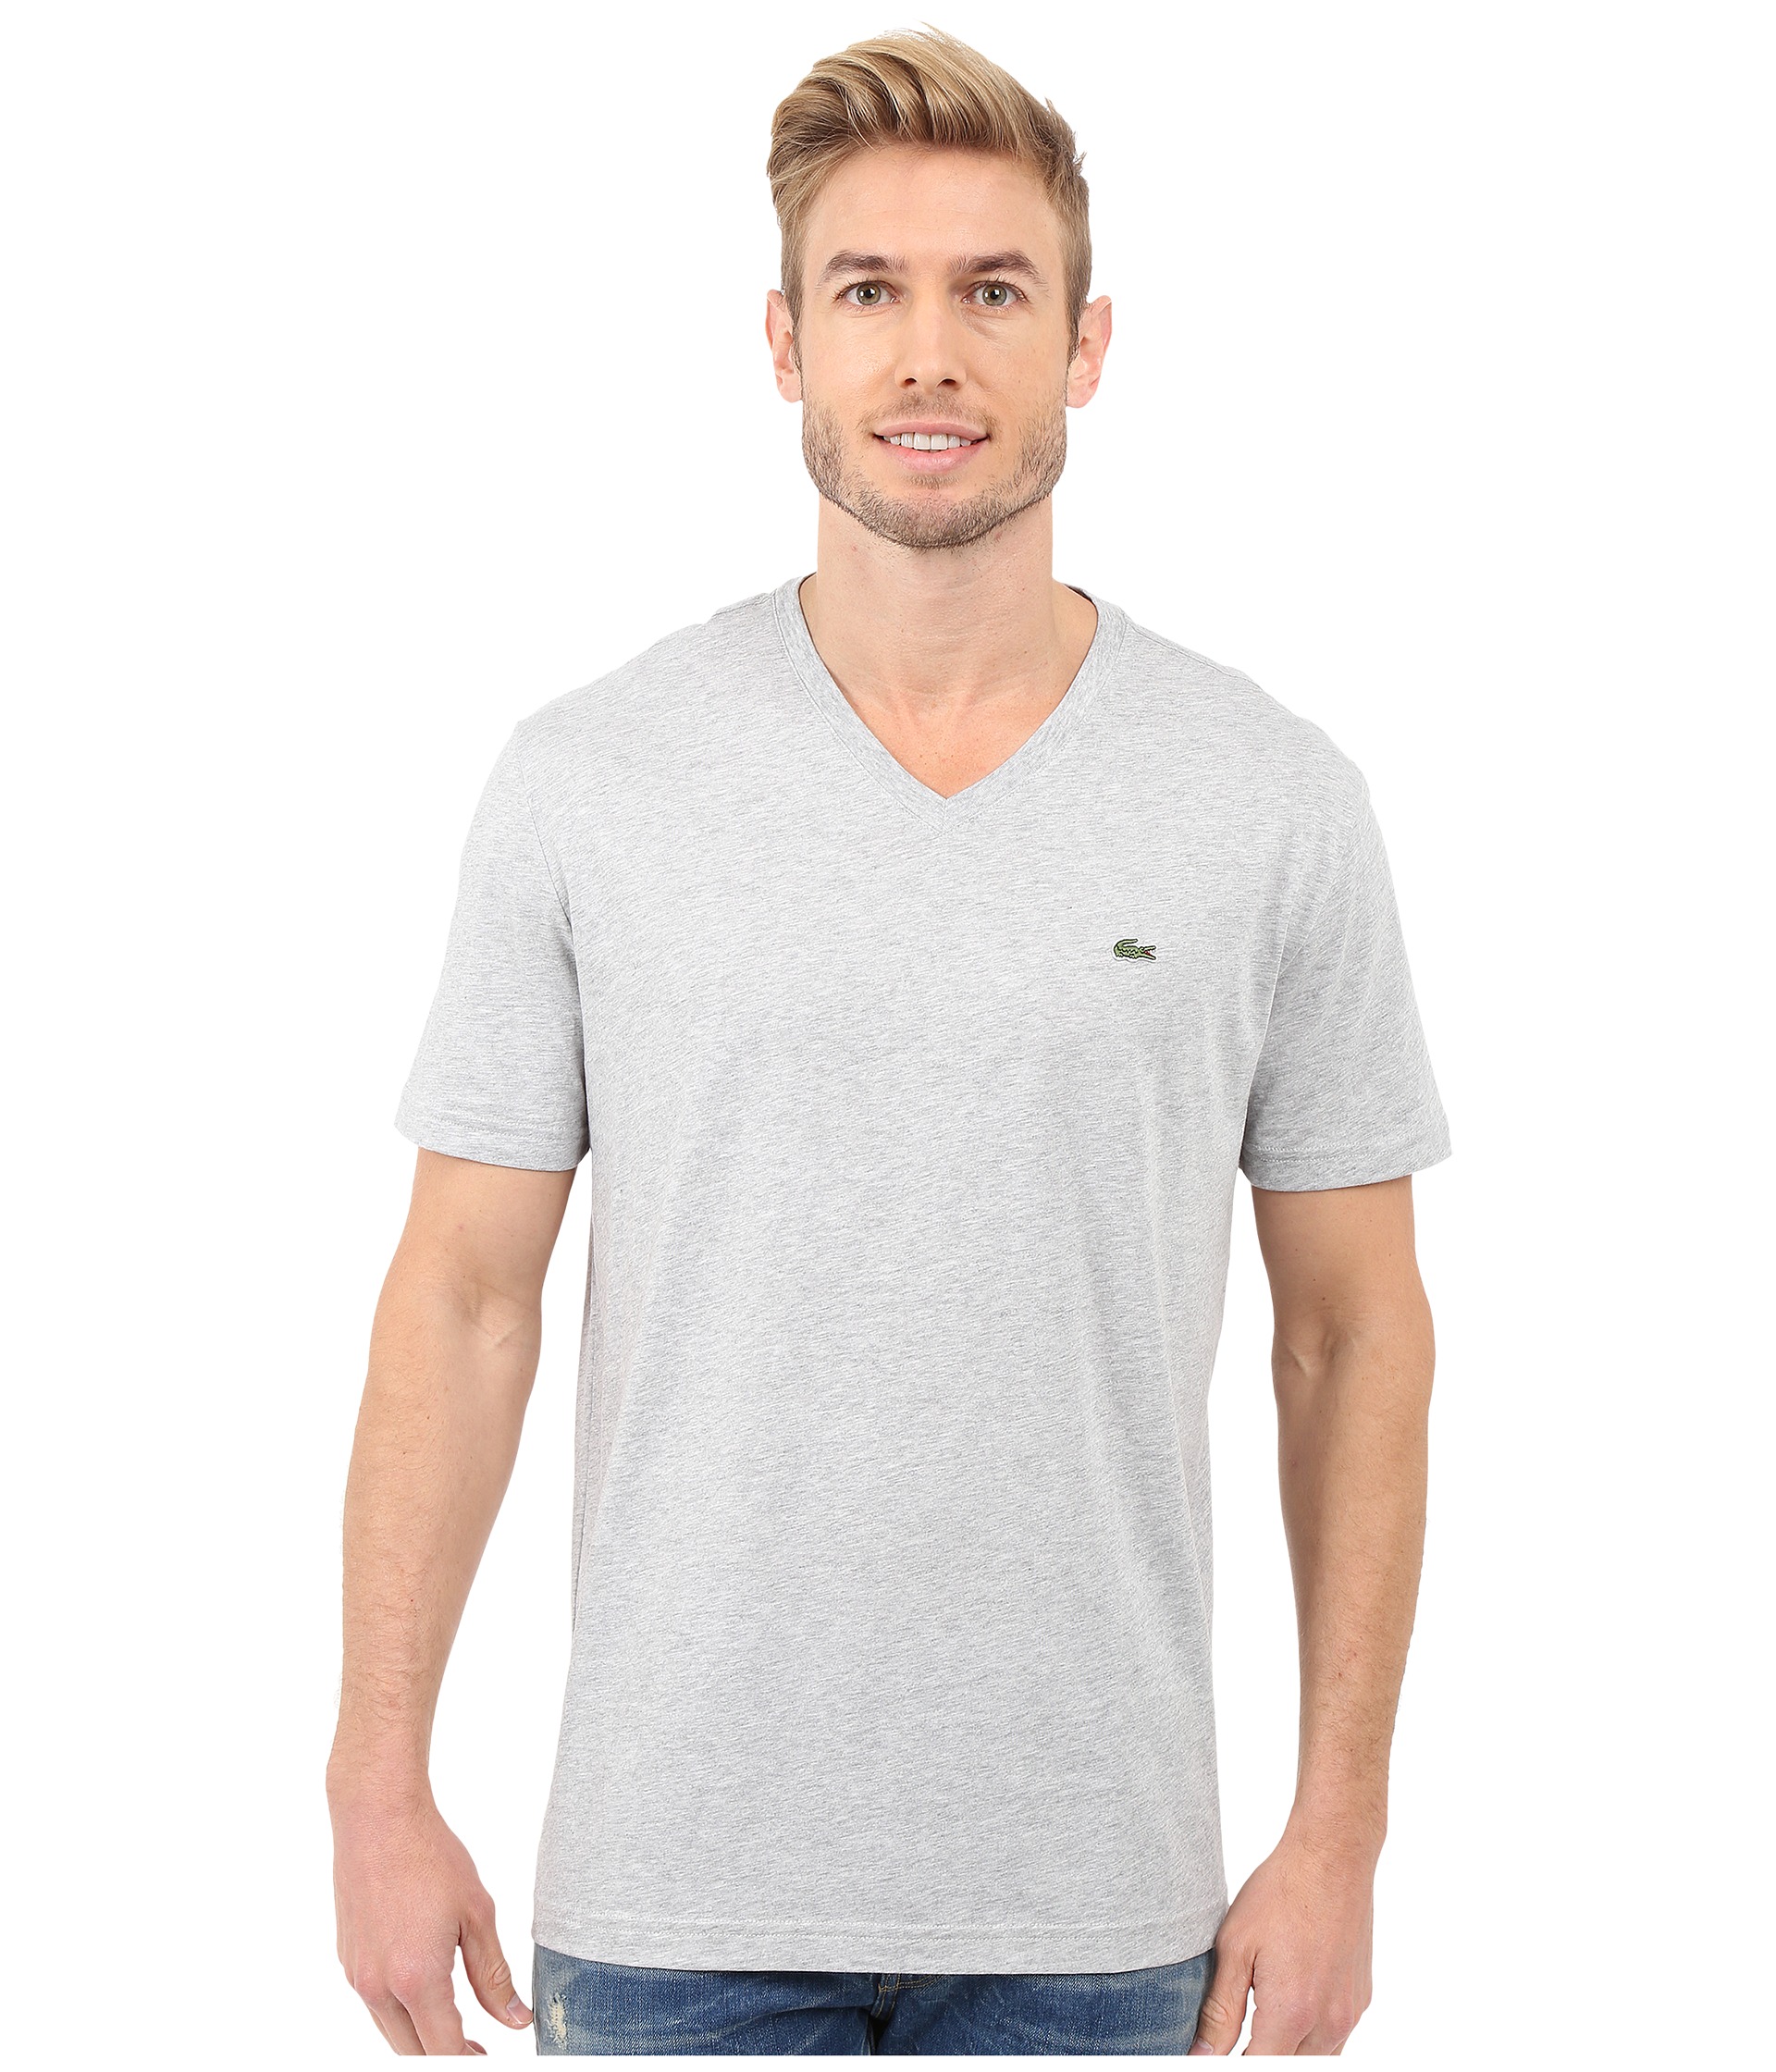 Lacoste S/S Pima Jersey V-Neck T-Shirt at Zappos.com